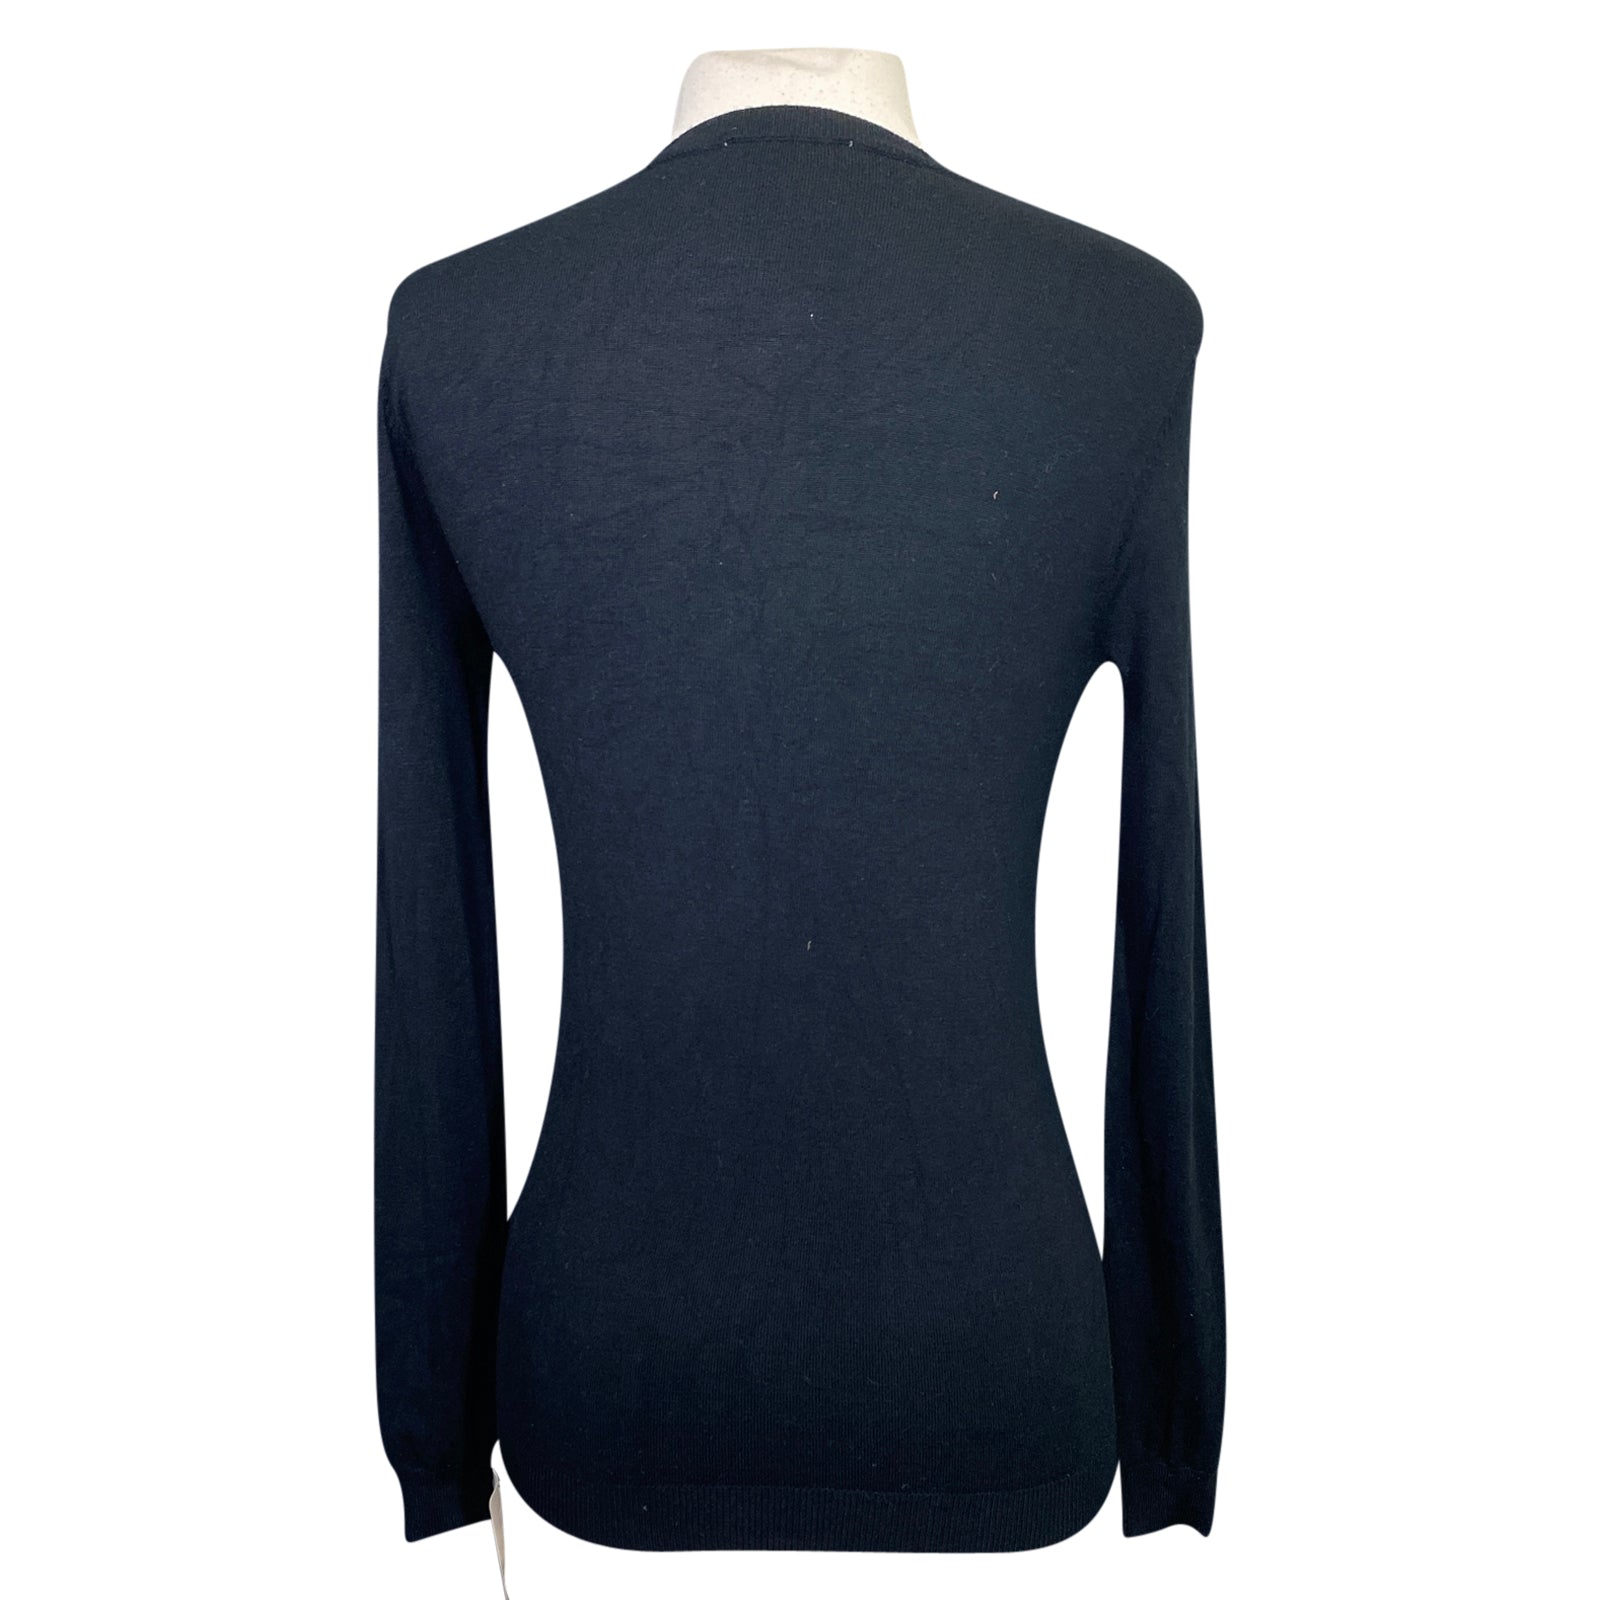 Back of TKEQ 'Essential' Crewneck Sweater in Black